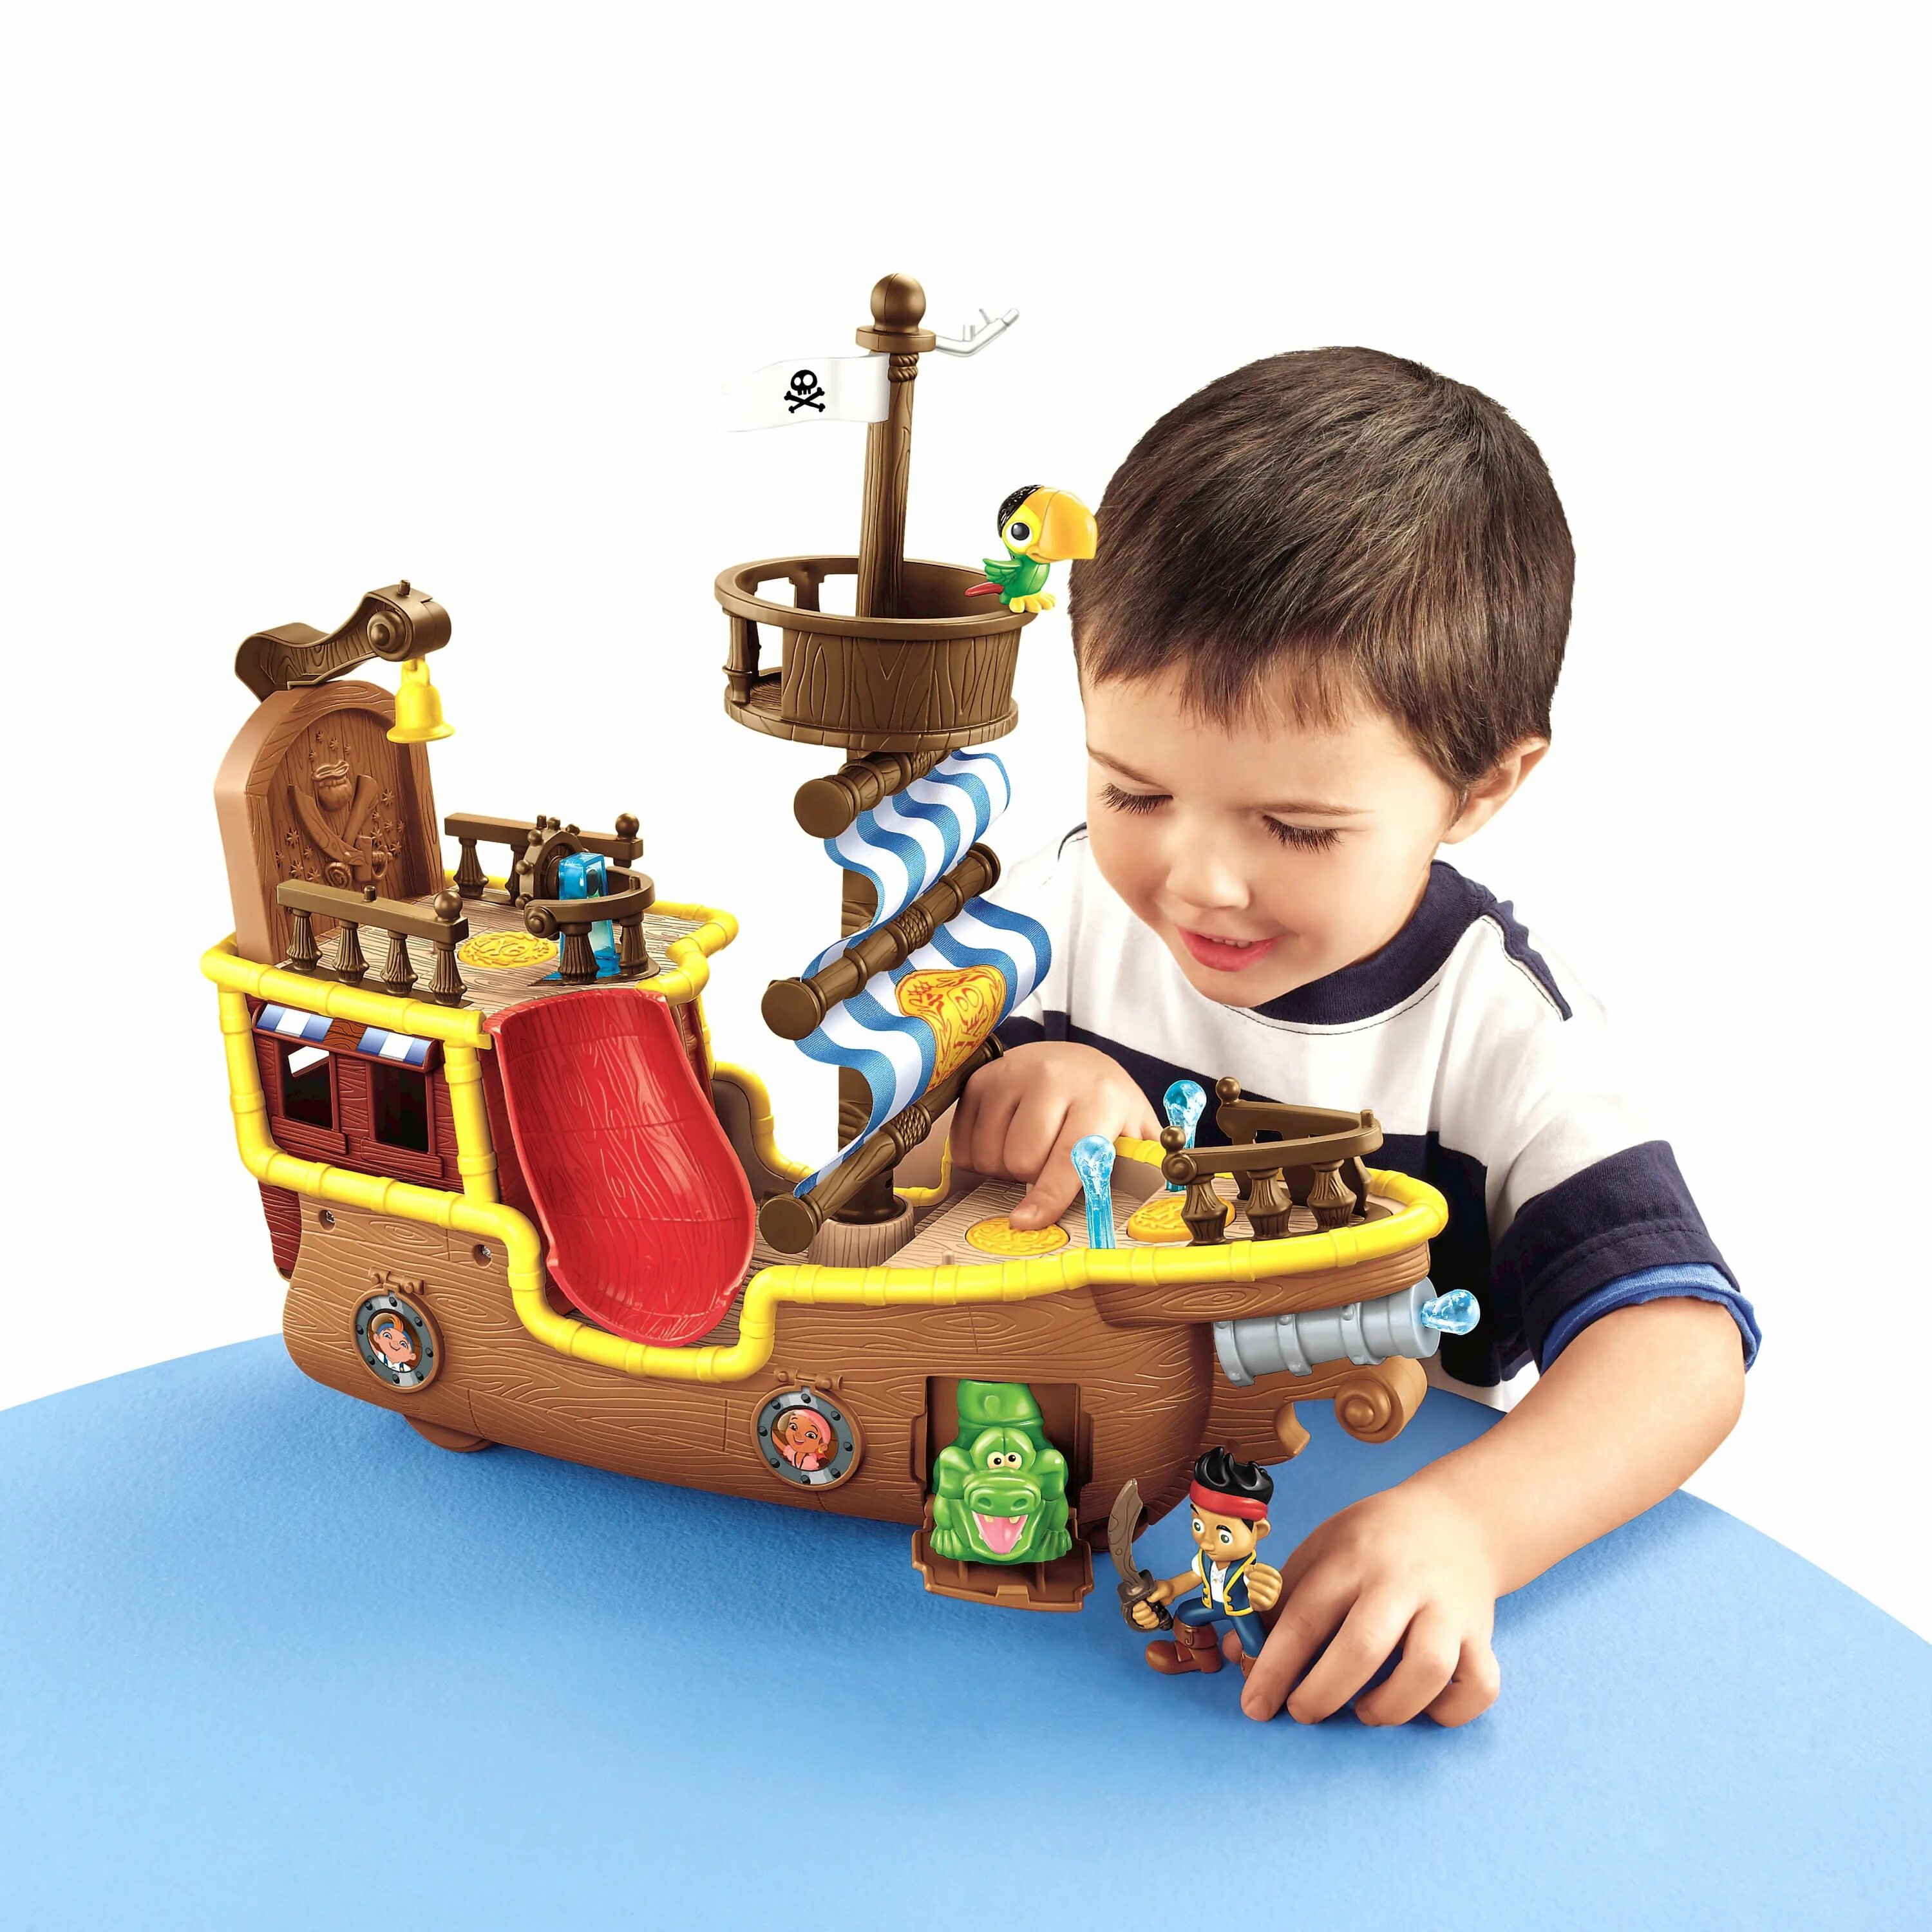 Jake and the Neverland Pirates игрушки. Пираты Нетландии корабль. Пиратский корабль Fisher Price. Пиратский корабль игрушка Fisher Price. Купить игрушку 6 лет